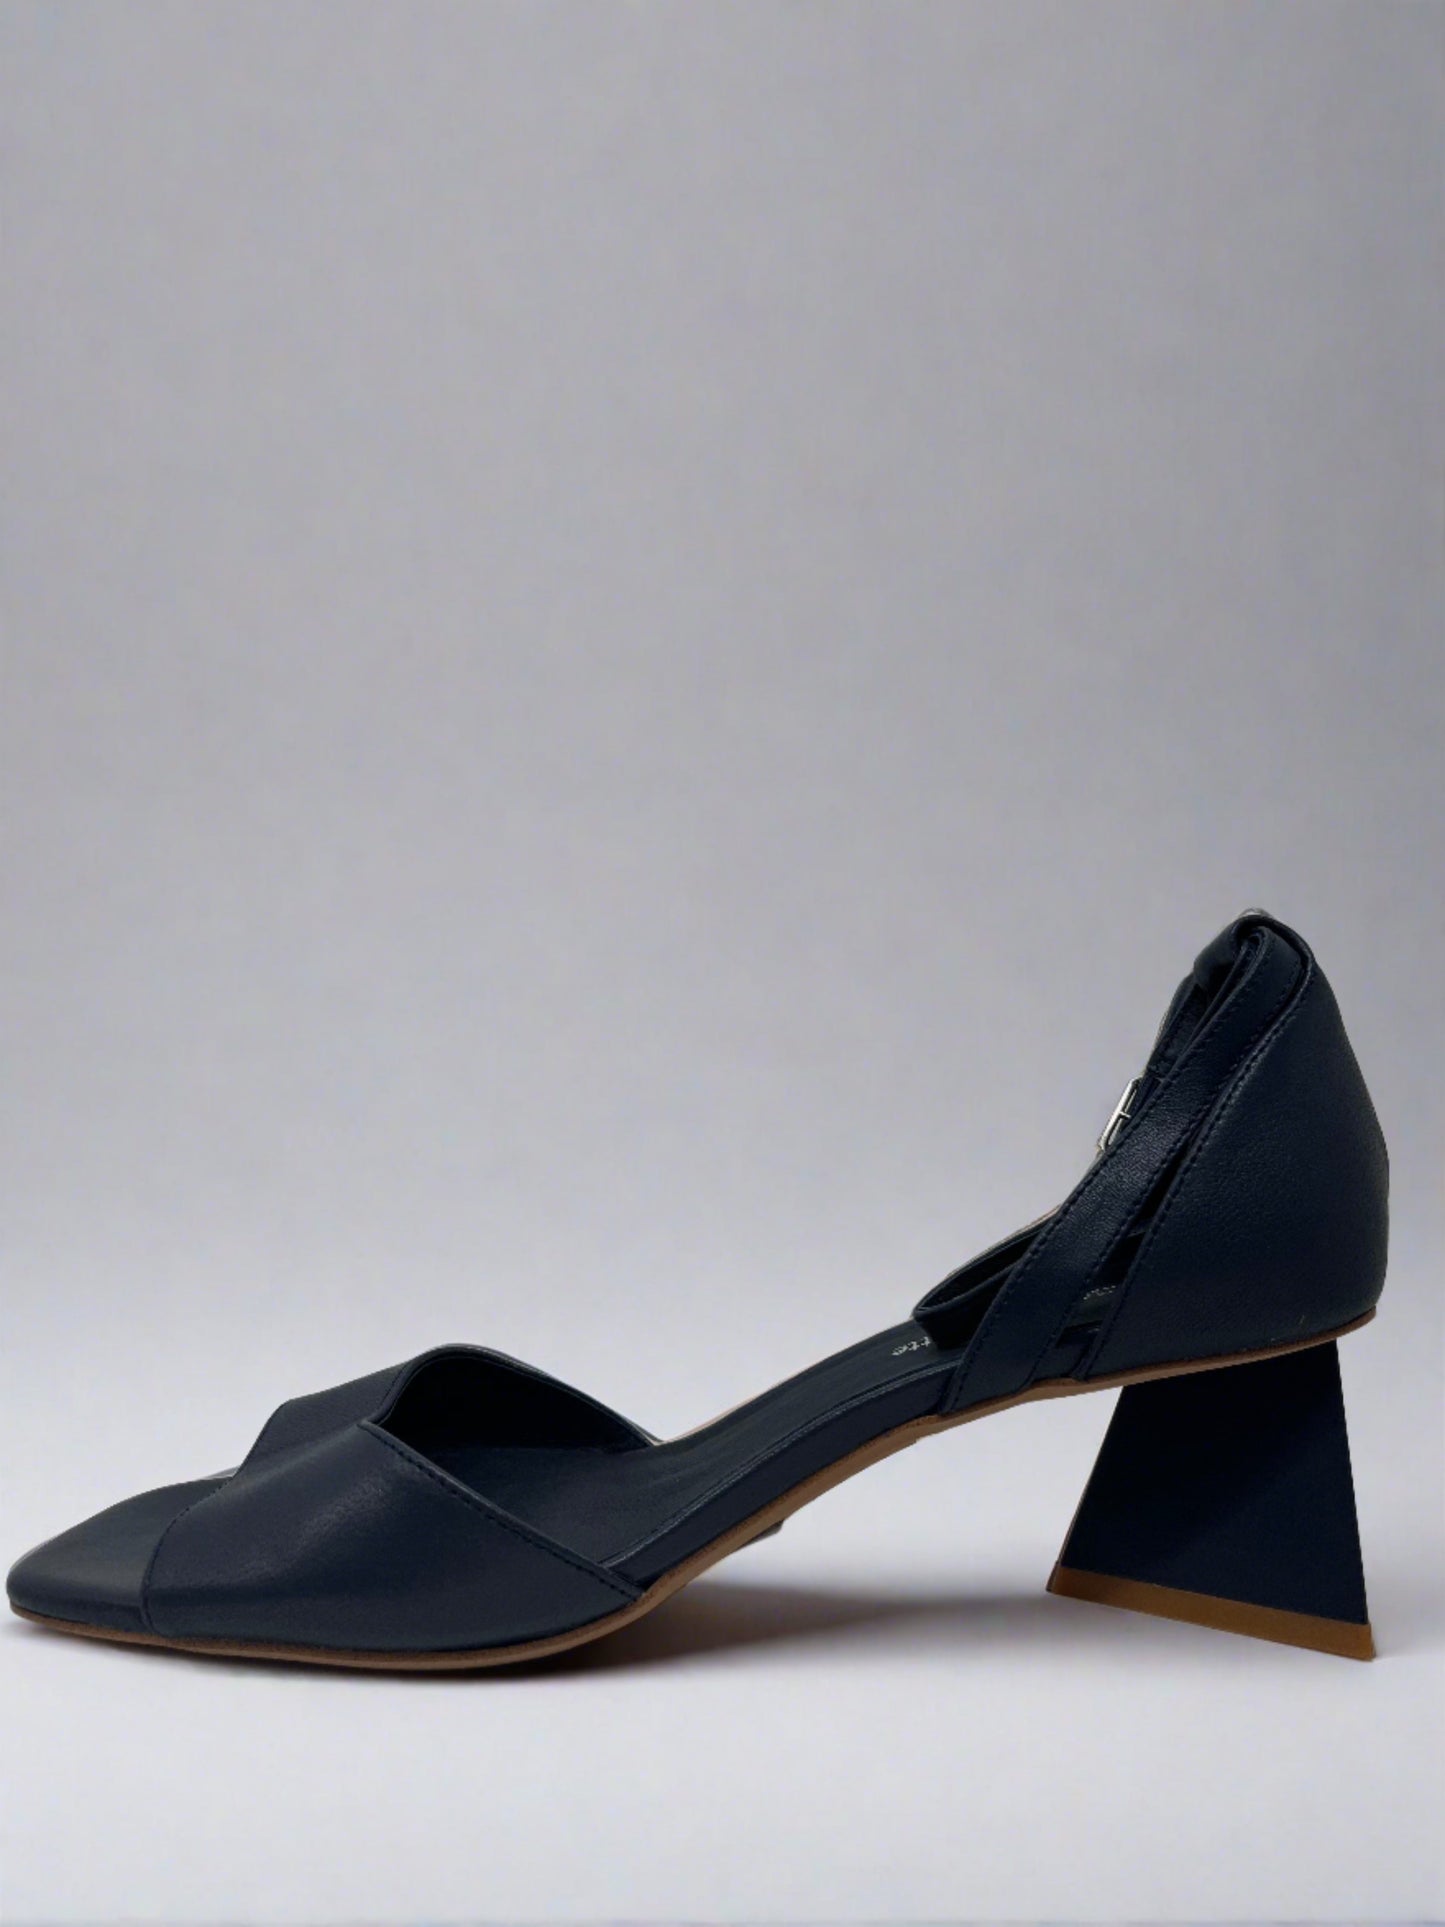 IMRICH BLOCK HEEL SANDAL - DJANGO AND JULIETTE - block heel, sandals, womens footwear - Stomp Shoes Darwin